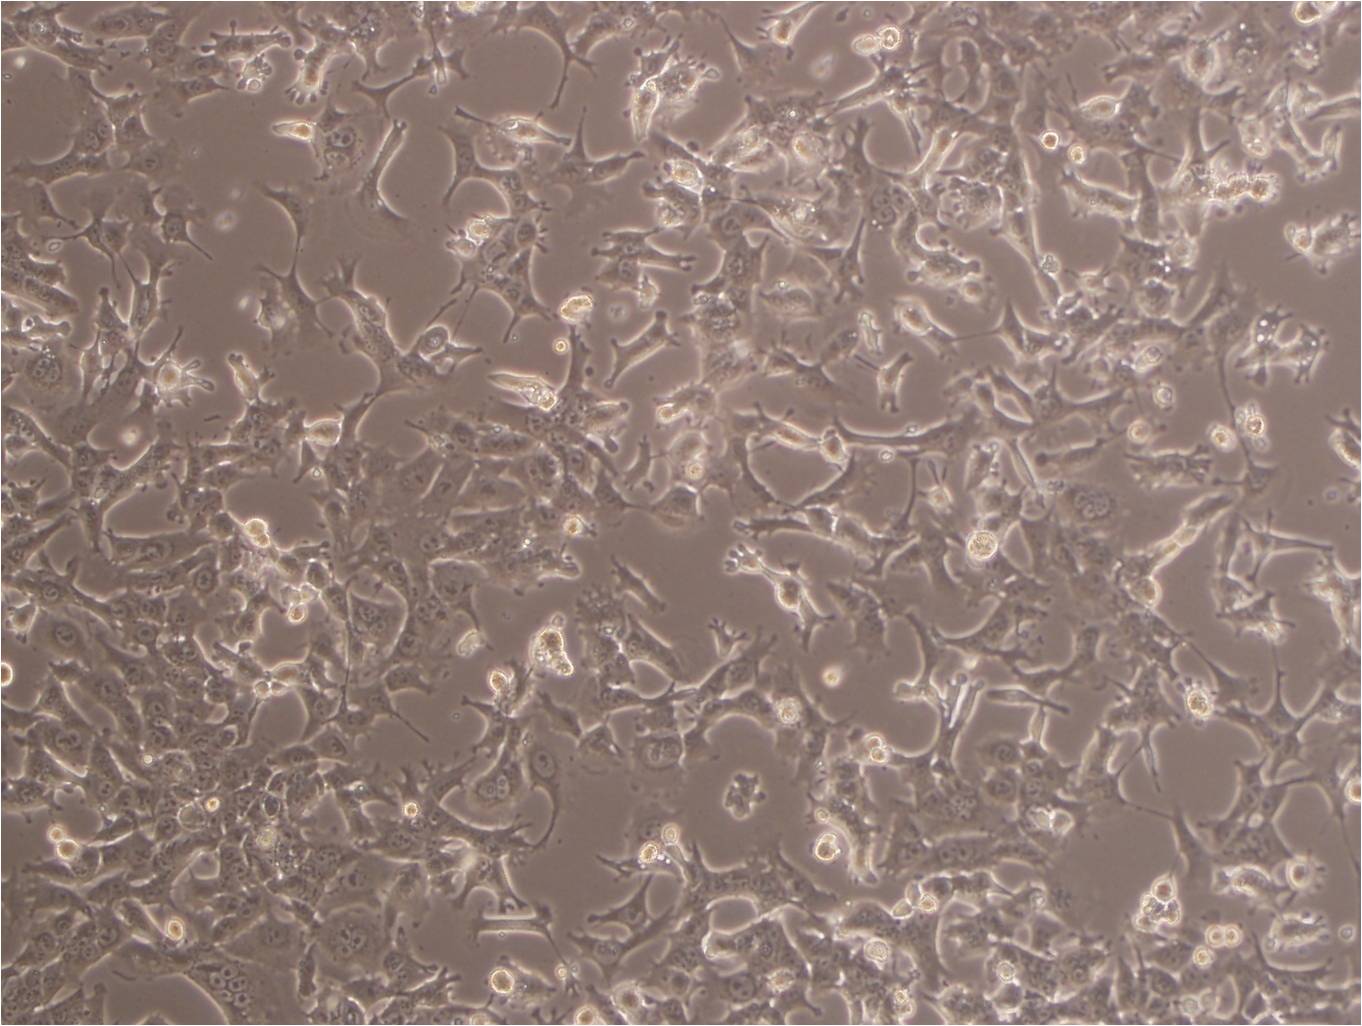 CMT64 epithelioid cells小鼠肺腺癌细胞系,CMT64 epithelioid cells